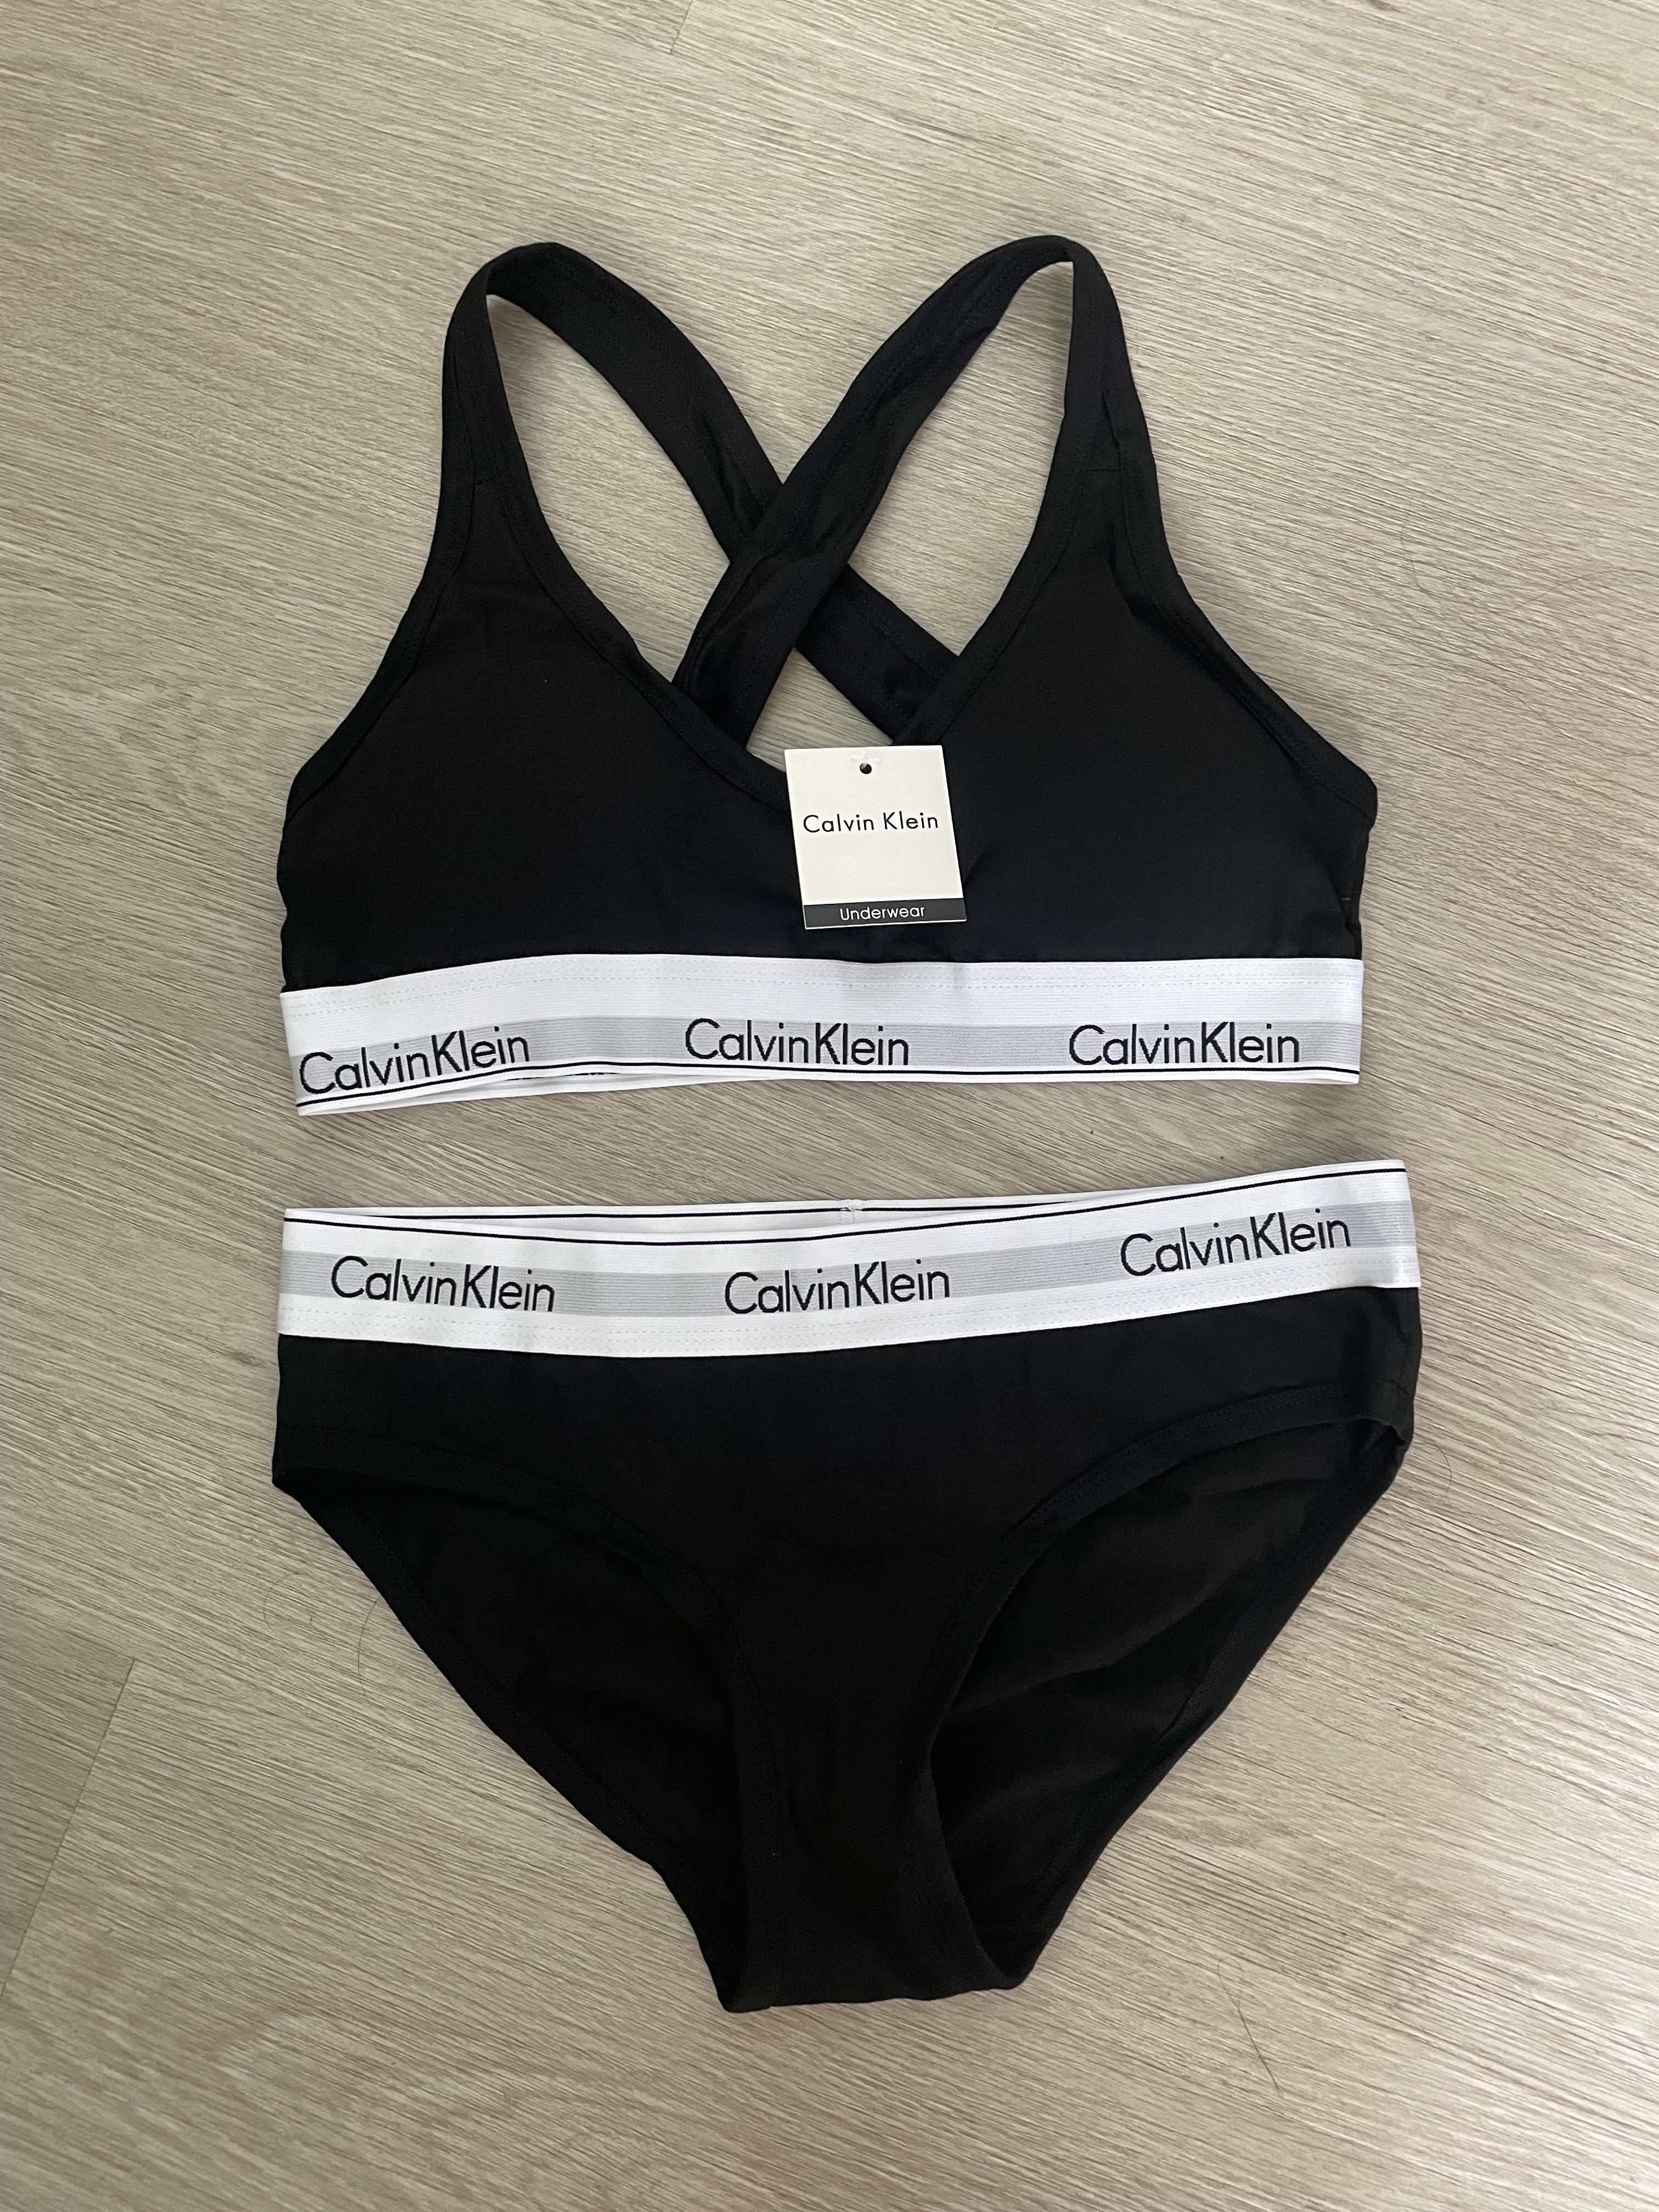 Calvin Klein bra and panties set 36B 80B / M - 50% off, Women's Fashion,  New Undergarments & Loungewear on Carousell